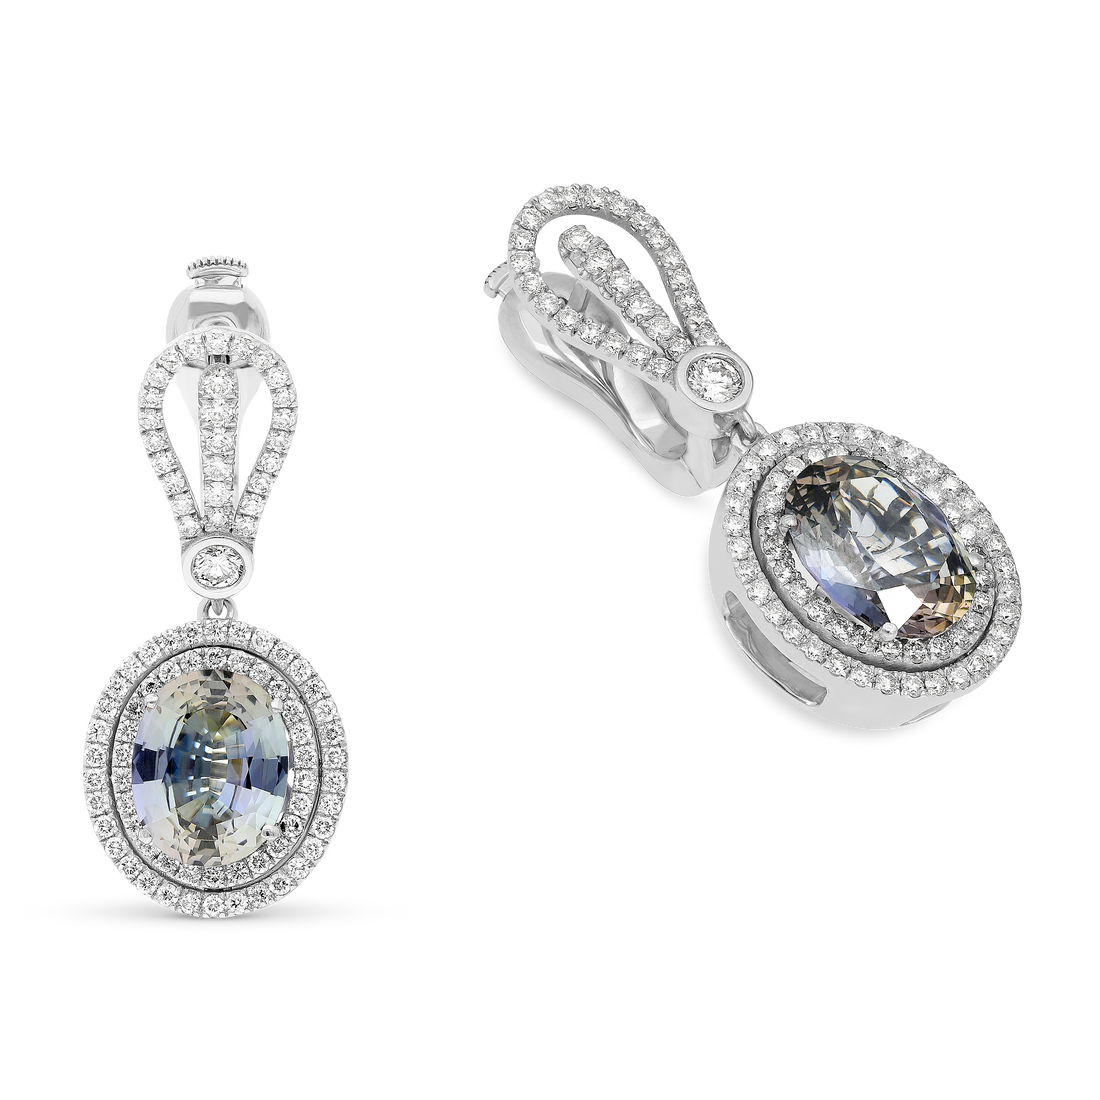 Oval Cut Tanzanite and Diamond Drop Earrings